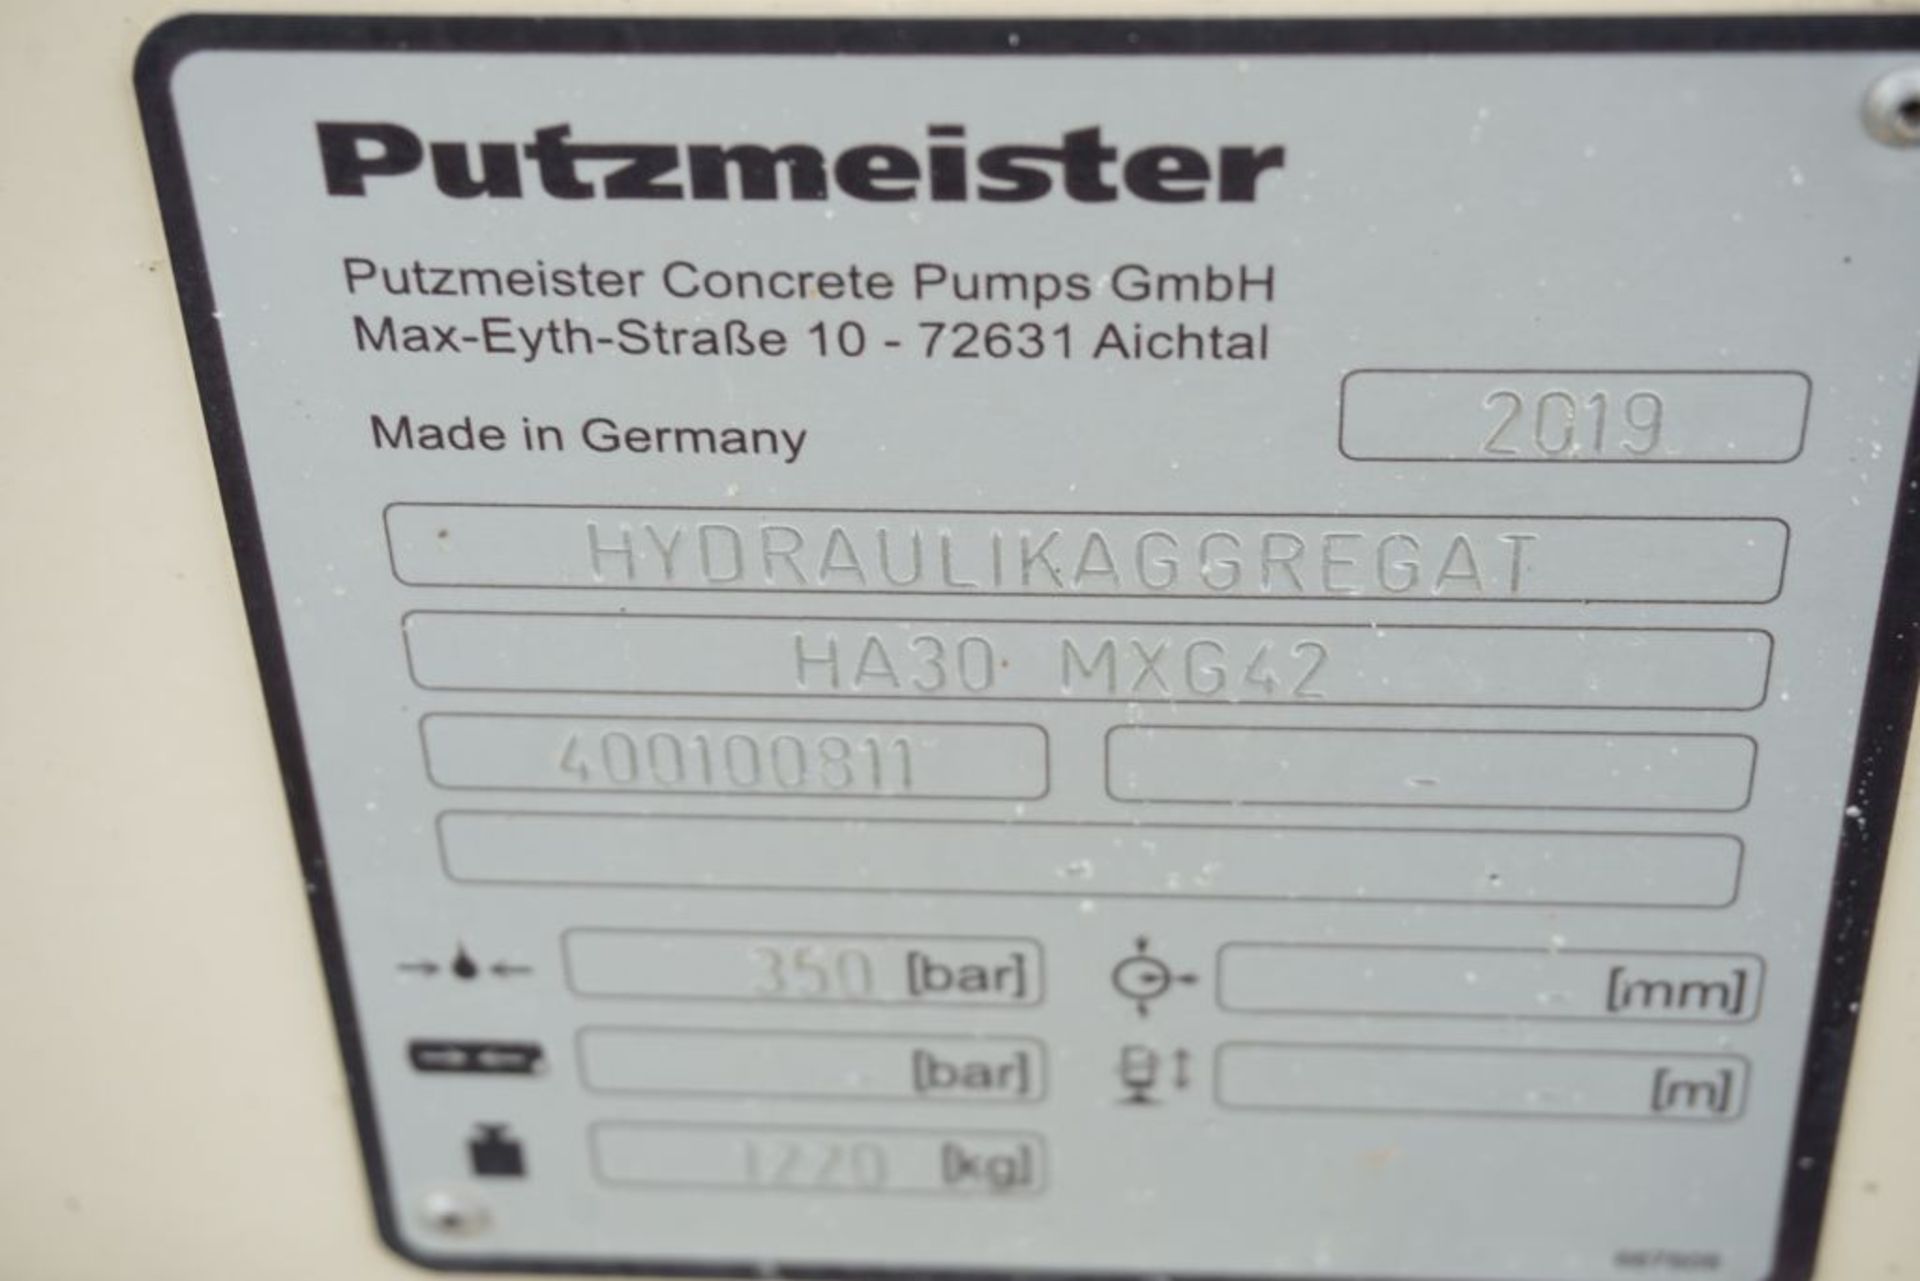 2019 Putzmeister Hydraulic Power Pack - Model No. HA 30 MXG42; Serial No. 400100811; 350 Bar; 1220 - Image 20 of 32